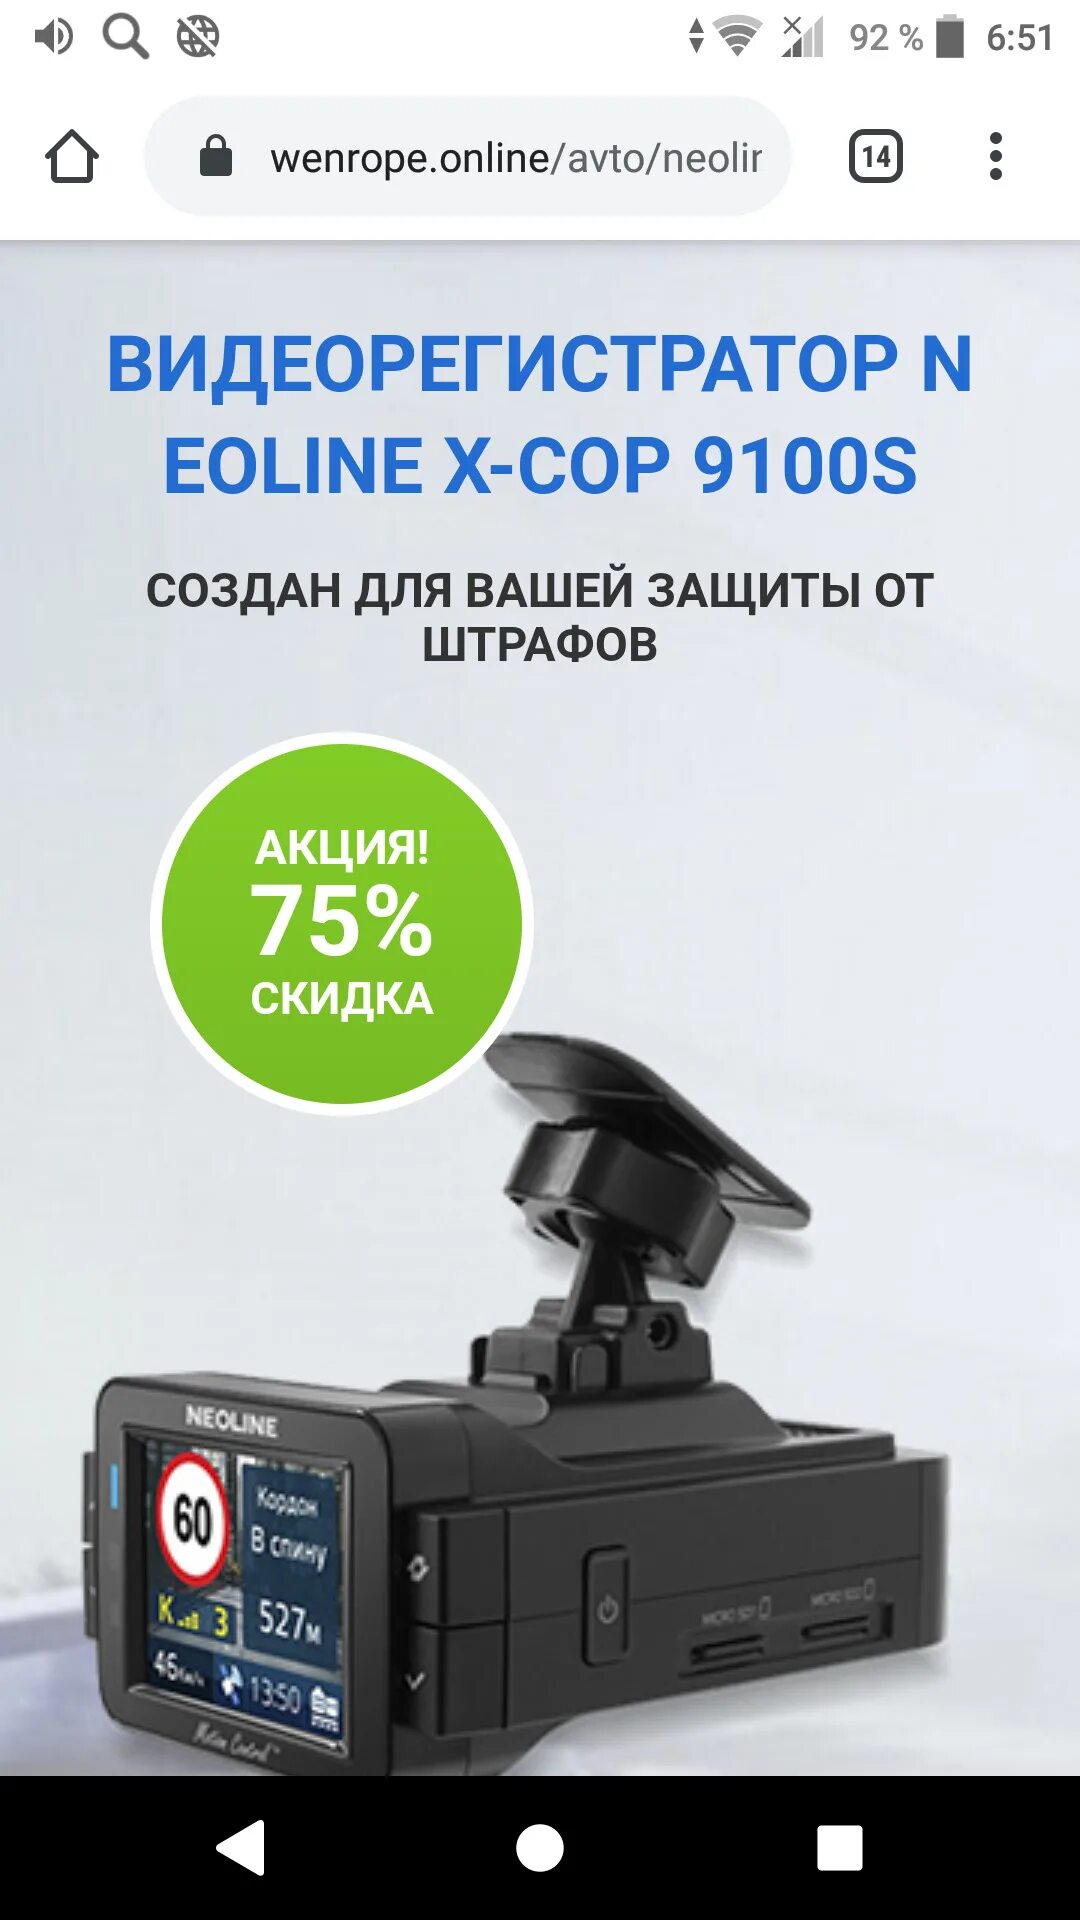 Neoline x cop 9100s цены. Регистратор Neoline x-cop. Видеорегистратор Неолайн 9100. Neoline x-cop 9100s. Видеорегистратор Neoline x-cop 9100s.